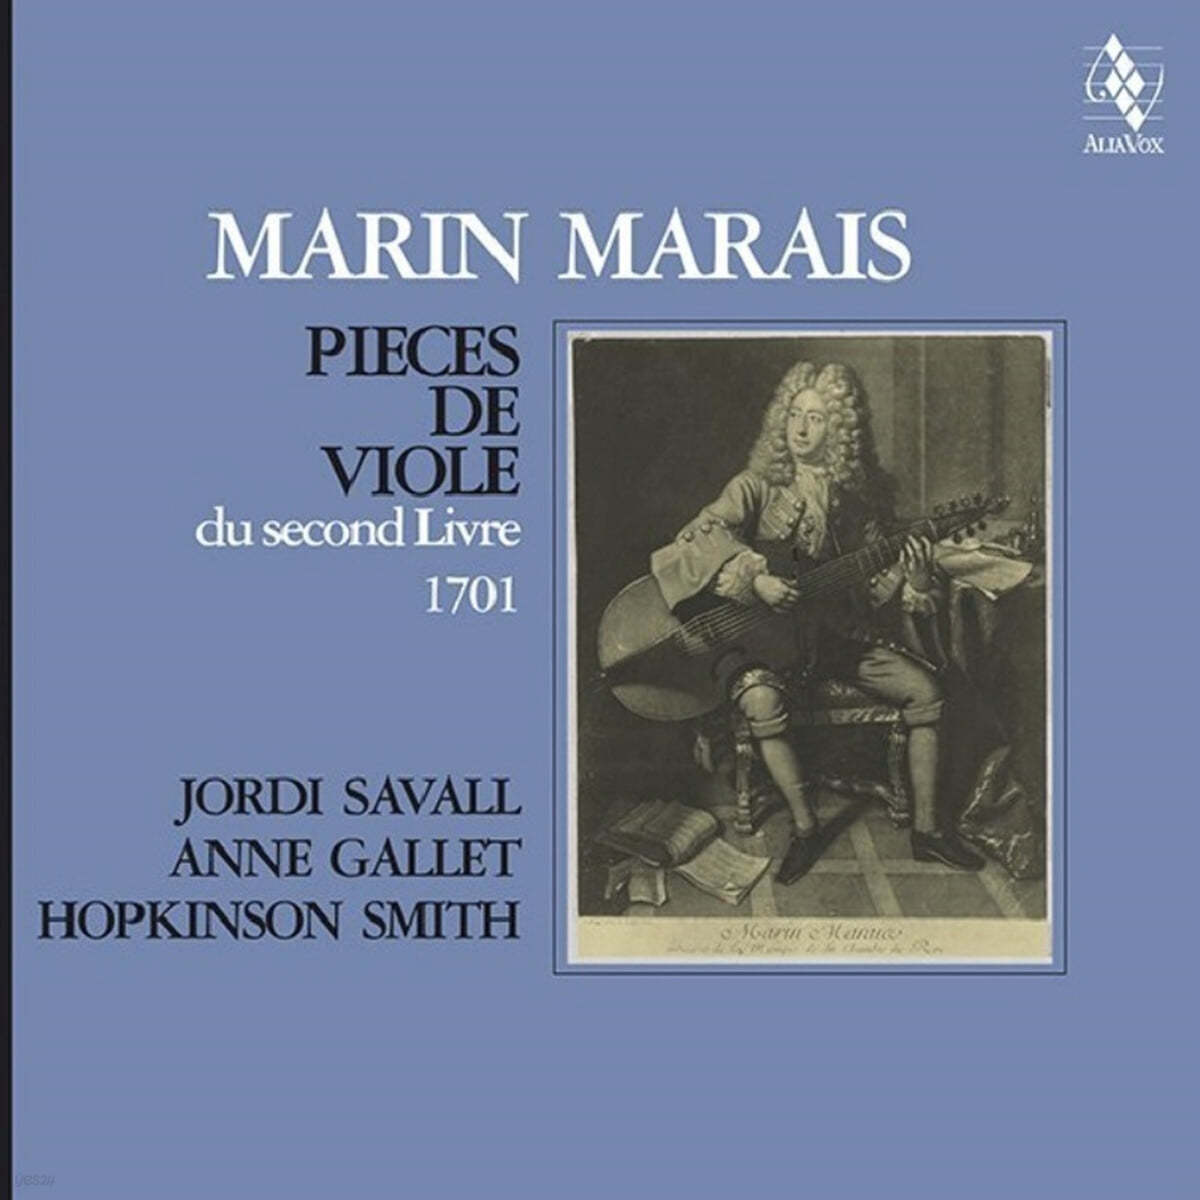 Jordi Savall 마랭 마레: 비올 작품집 2권 (Marais: Pieces De Viole Du Second Livre 1701) [LP]